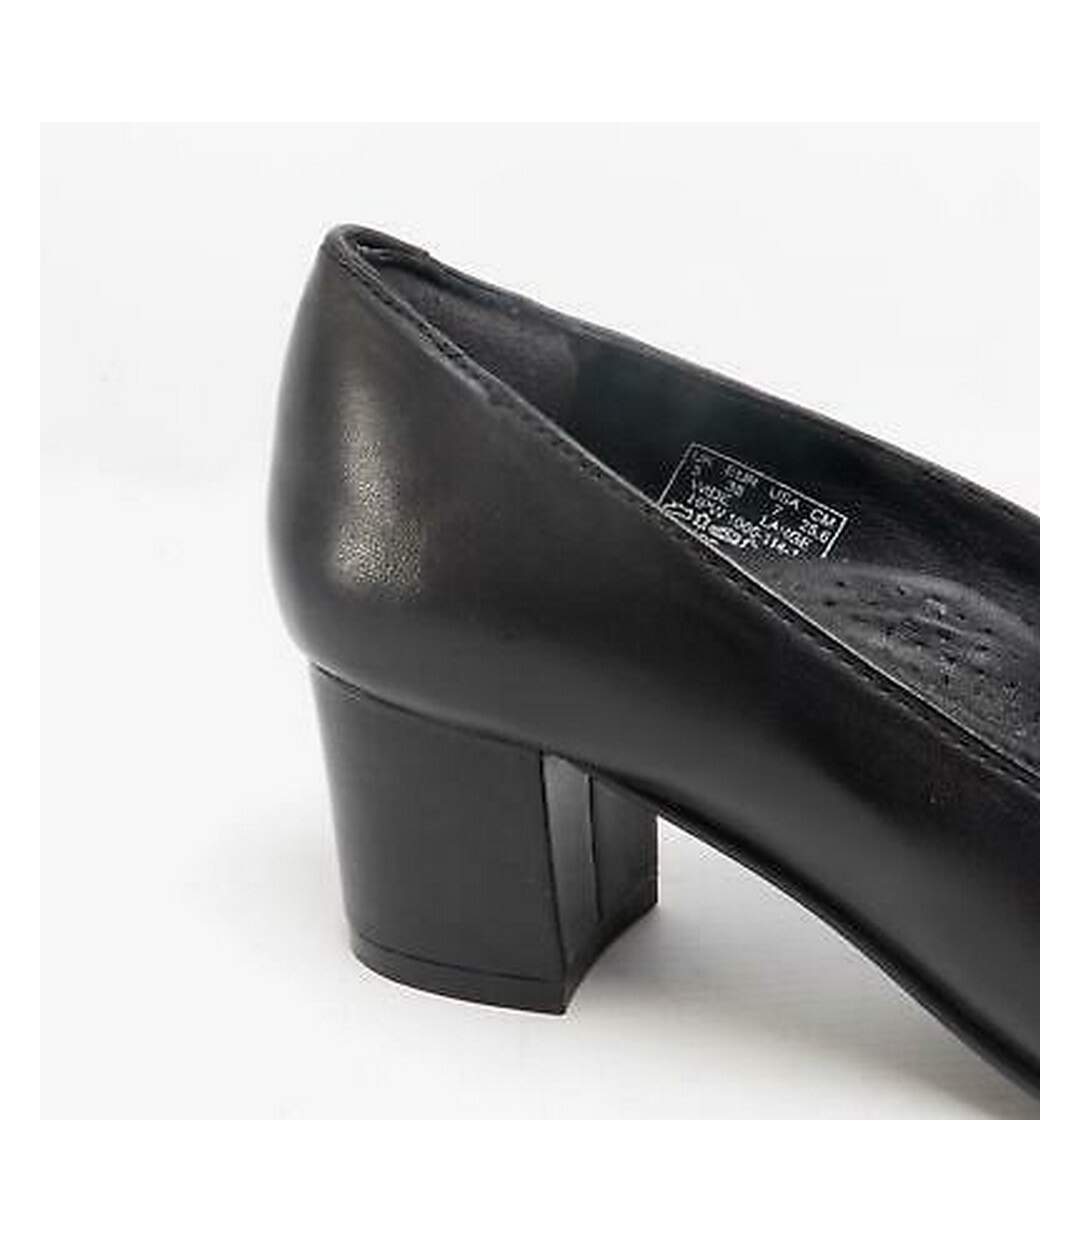 Hush Puppies Ladies/Womens Anna Leather Court Shoe (Black) - UTFS7053